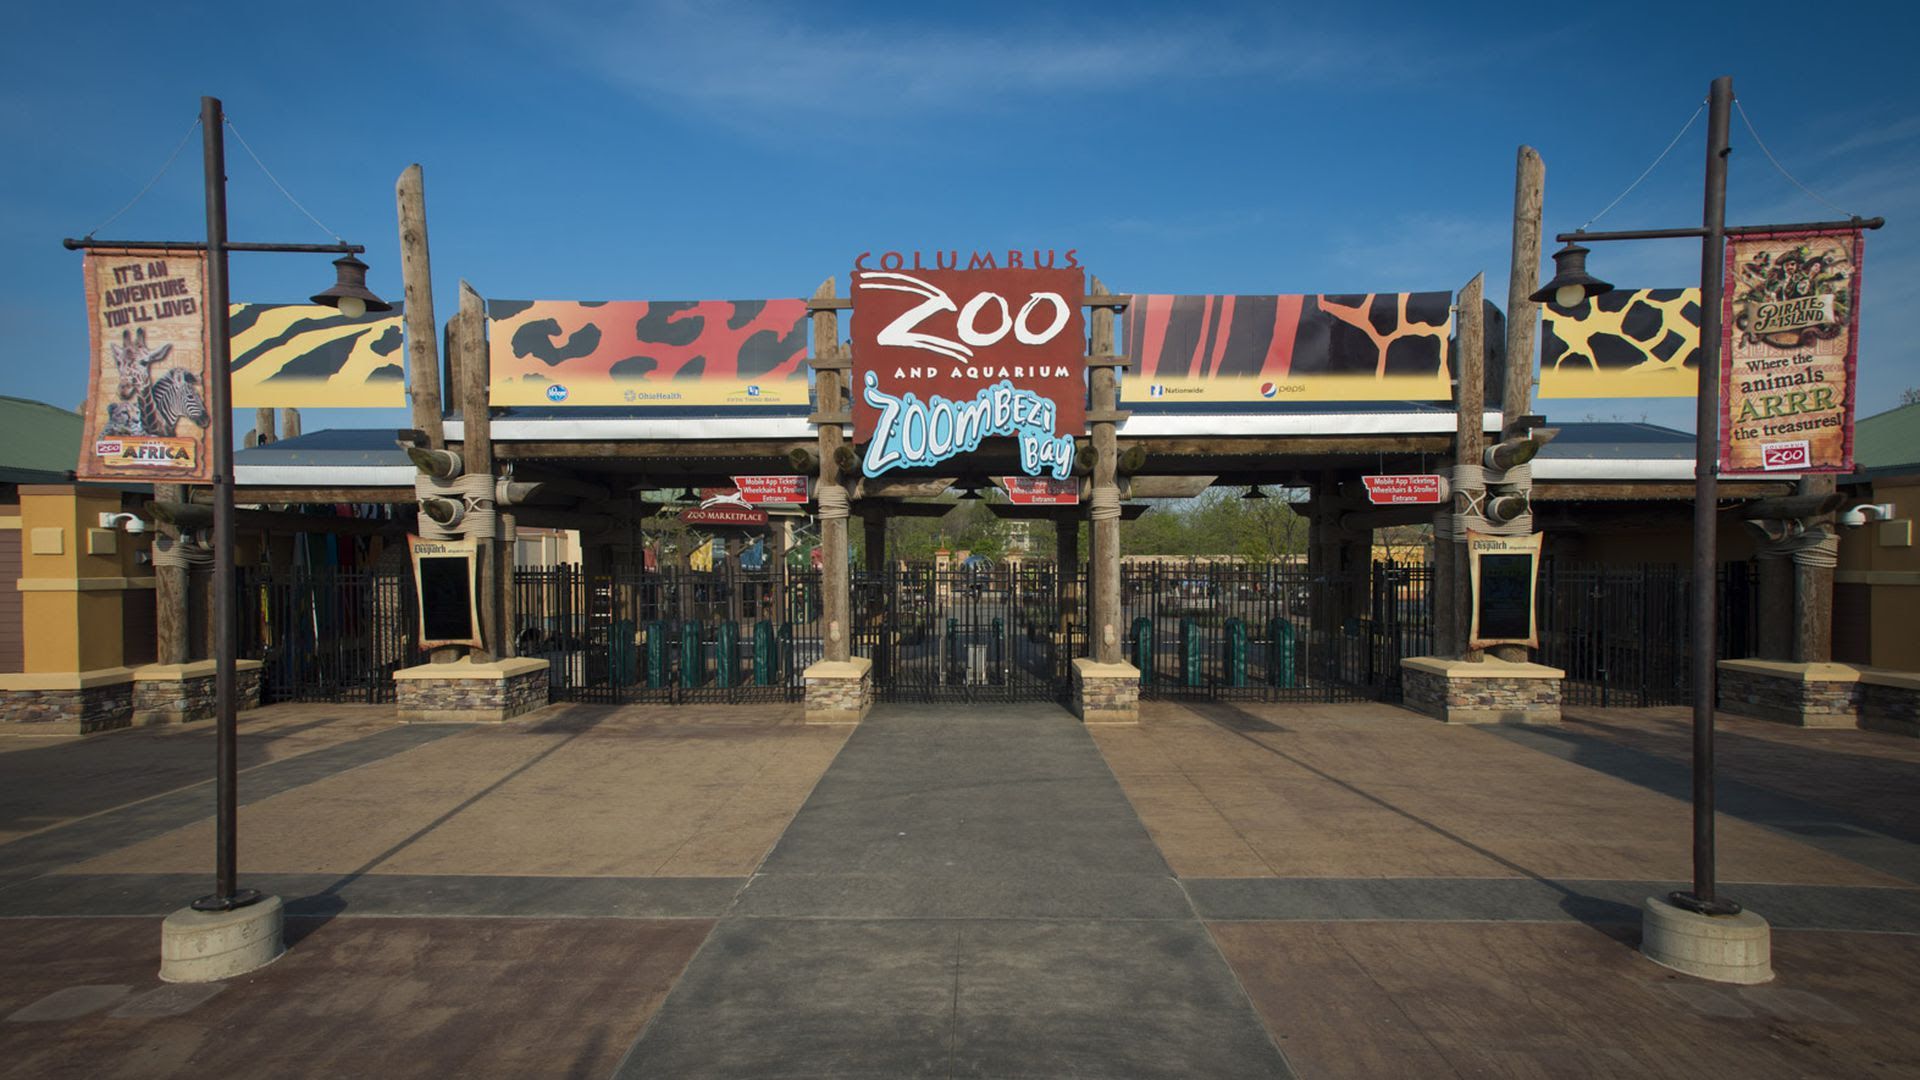 The Columbus Zoo and Aquarium entrance.